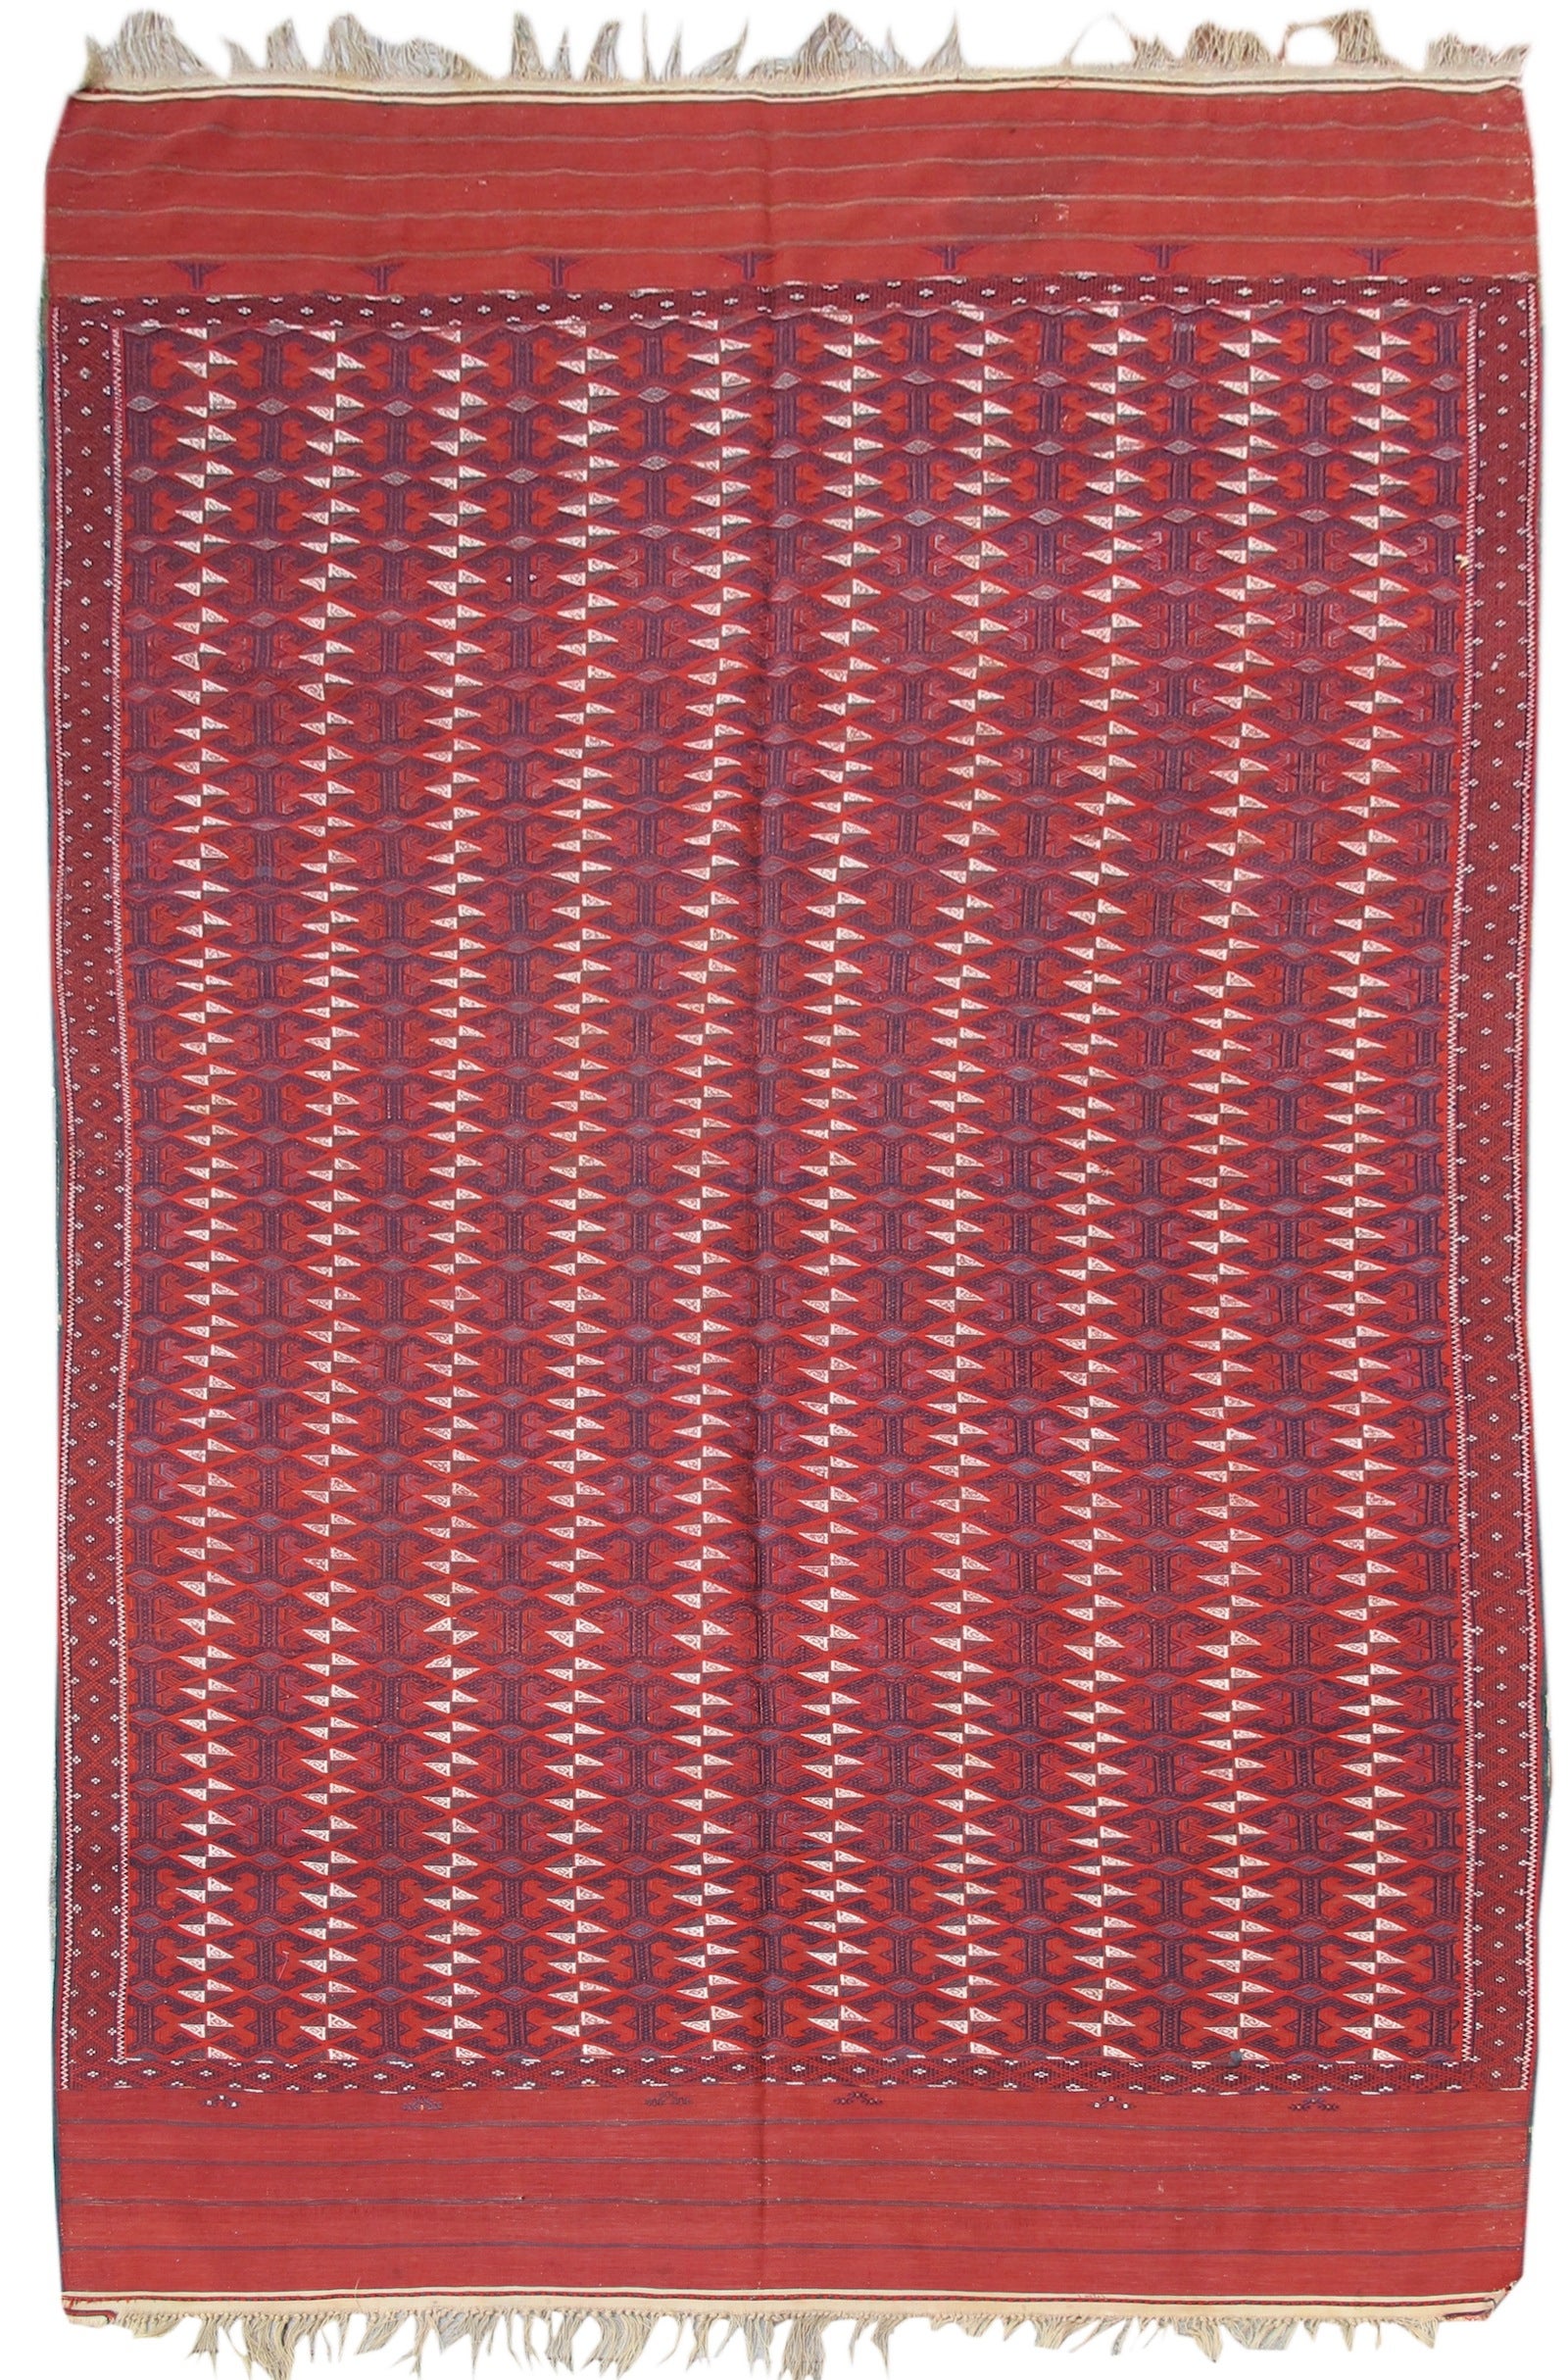 Tapis principal turkmène rouge Tekke tissé à plat, fin du 19ème siècle 